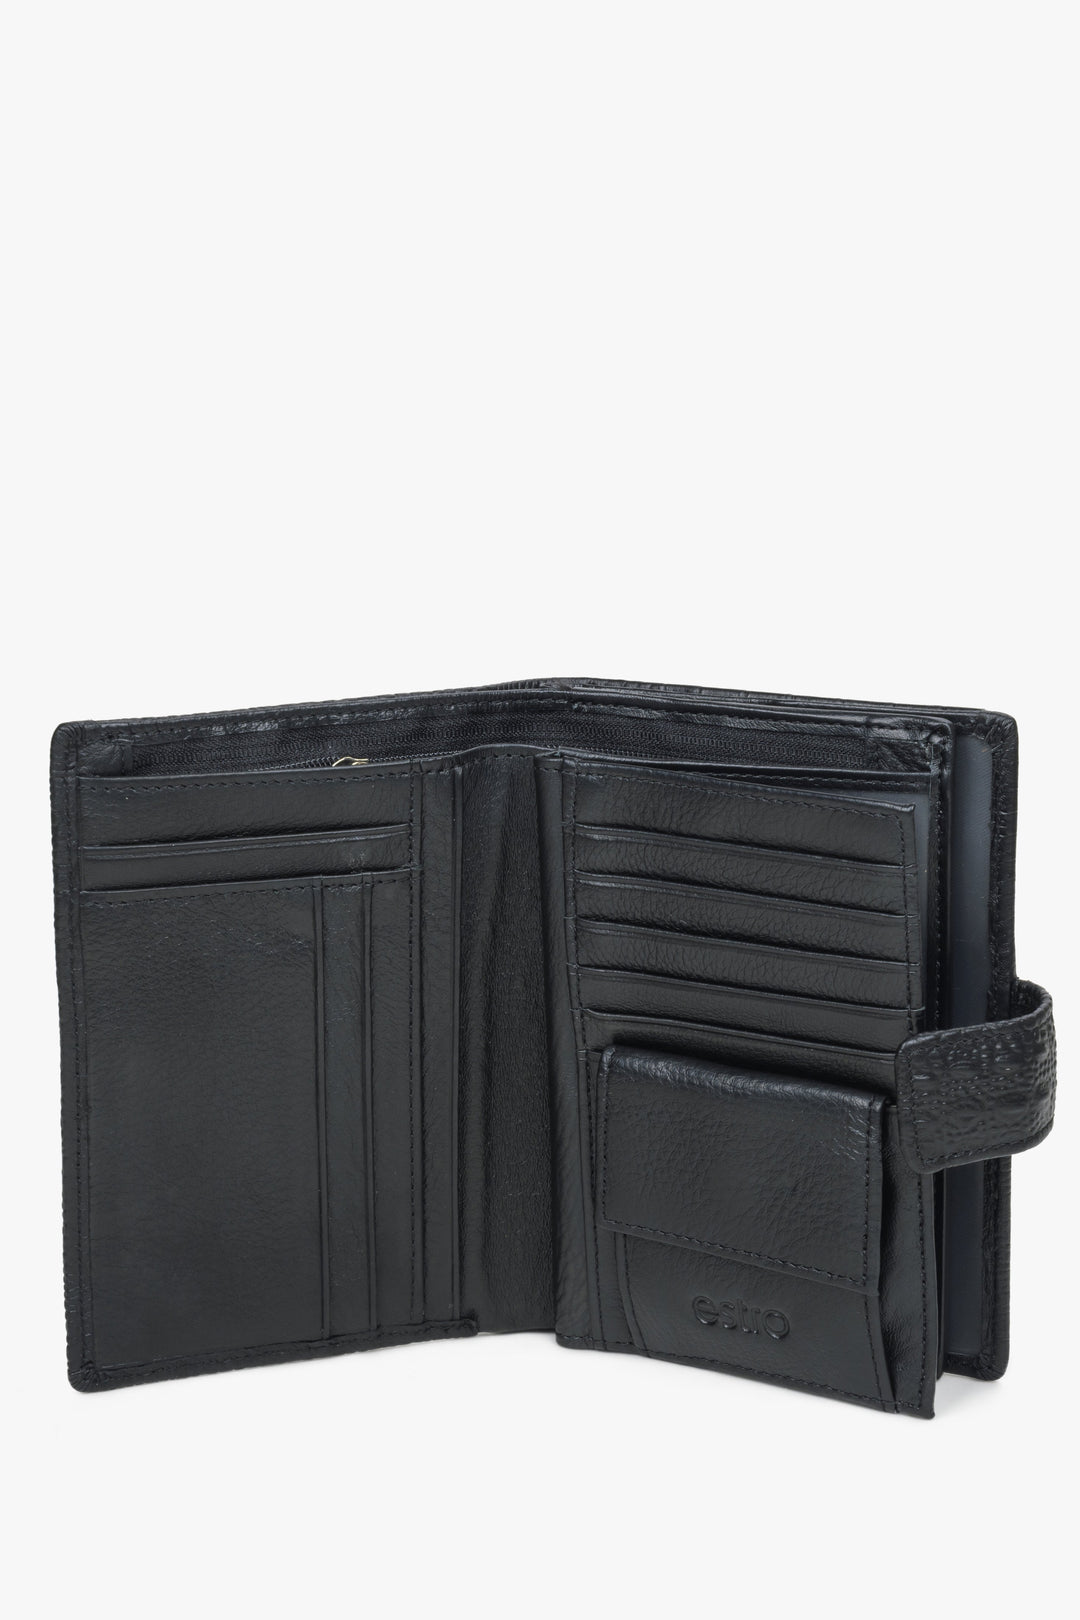 Czarny funkcjonalny portfel męski ze skóry naturalnej Estro - wnętrza portfela.